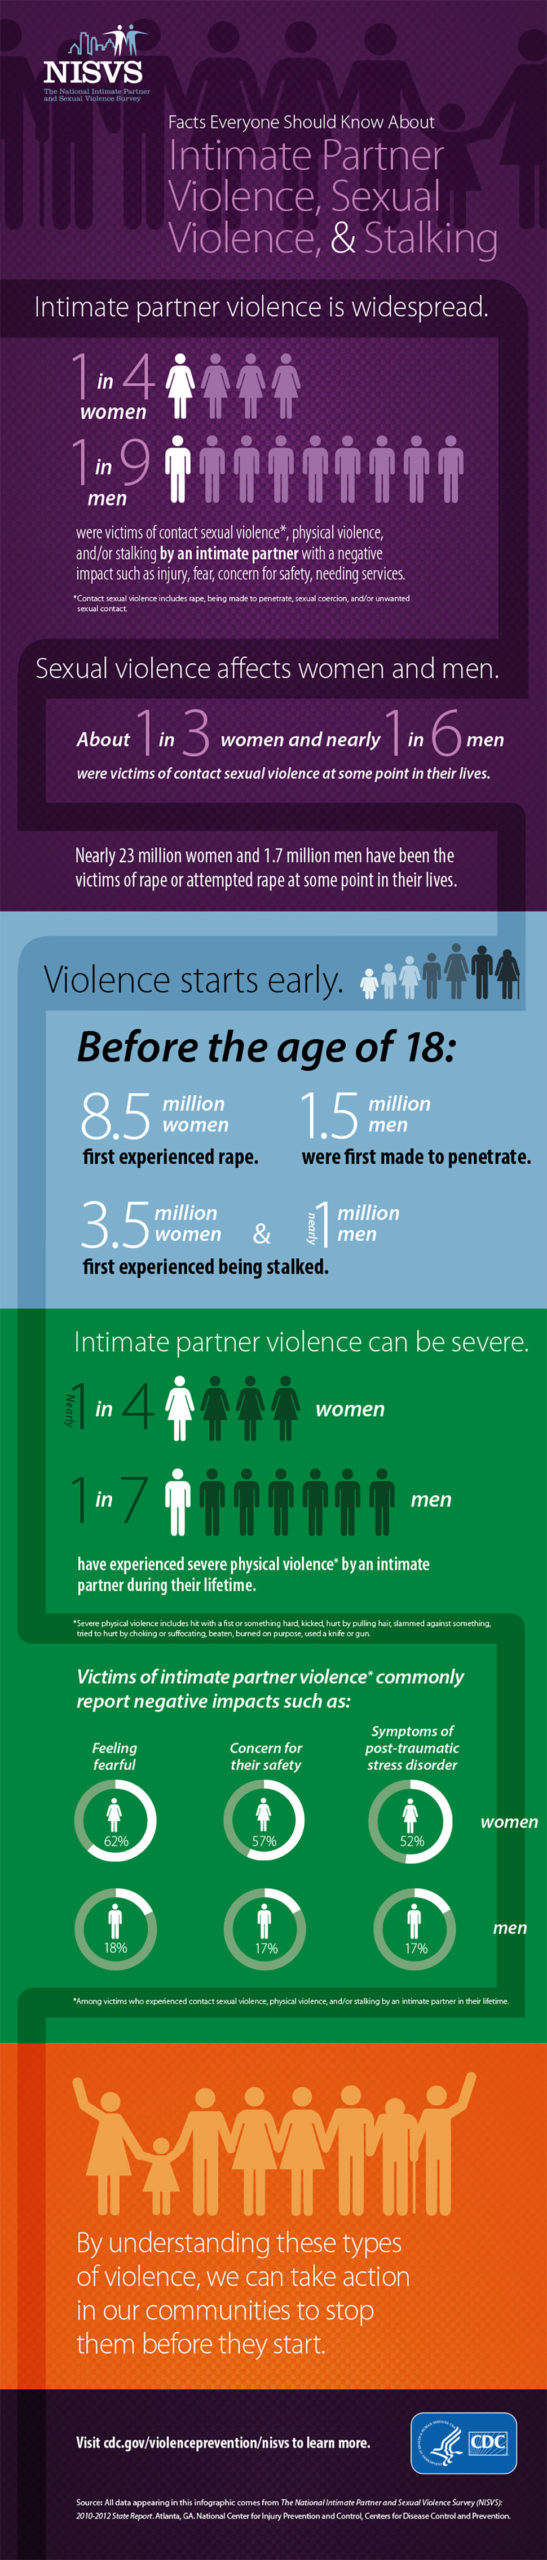 Infographic describing intimate partner violence data